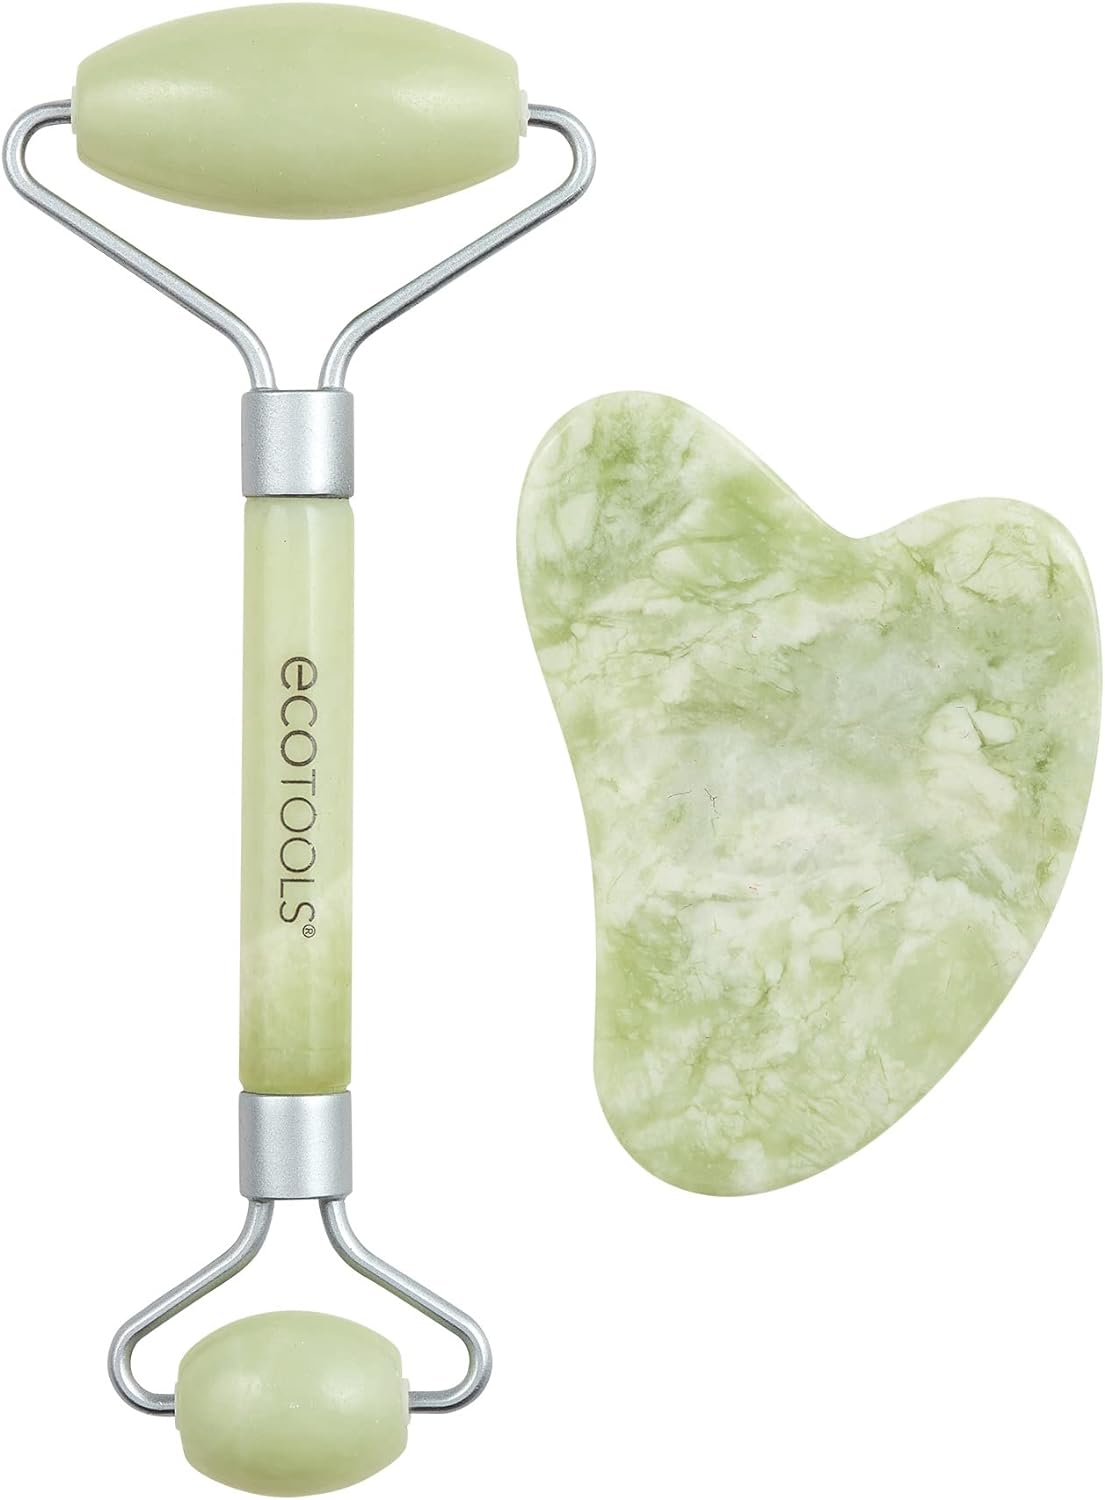 EcoTools Jade Roller and Gua sha Facial Set, Face Roller and Massage Tool, 100% Jade Skincare Essential